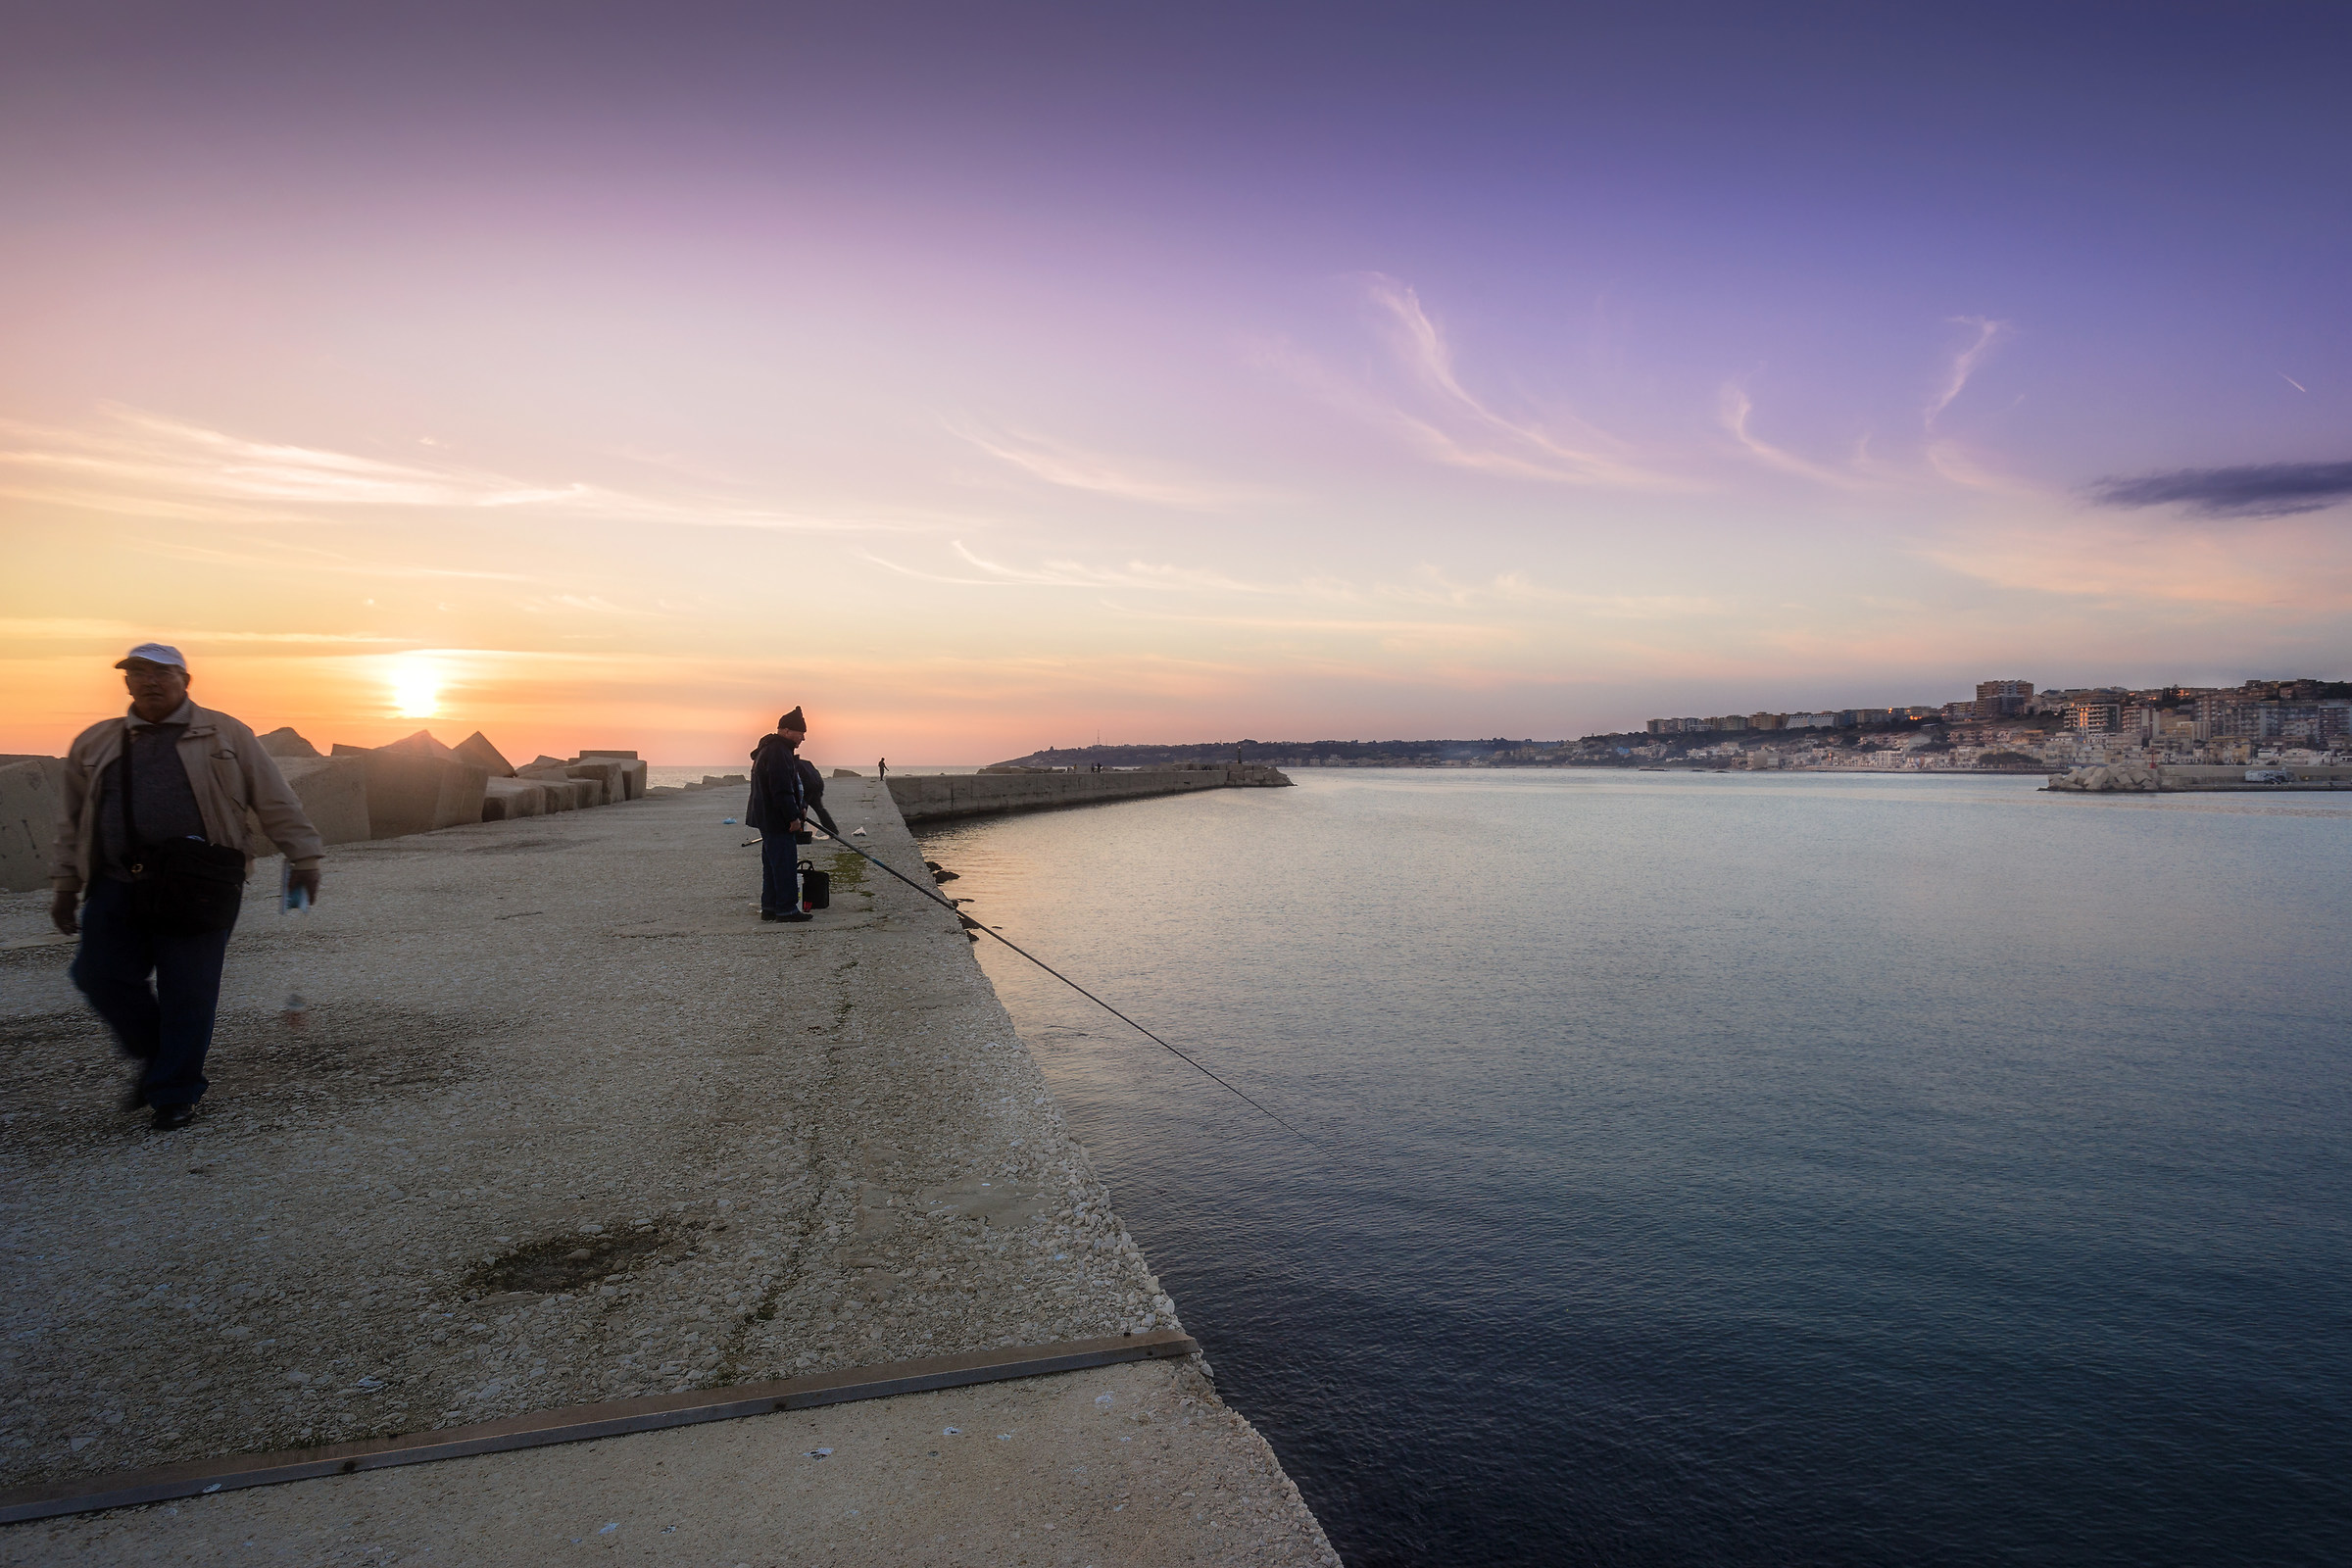 Fishing at sunset...